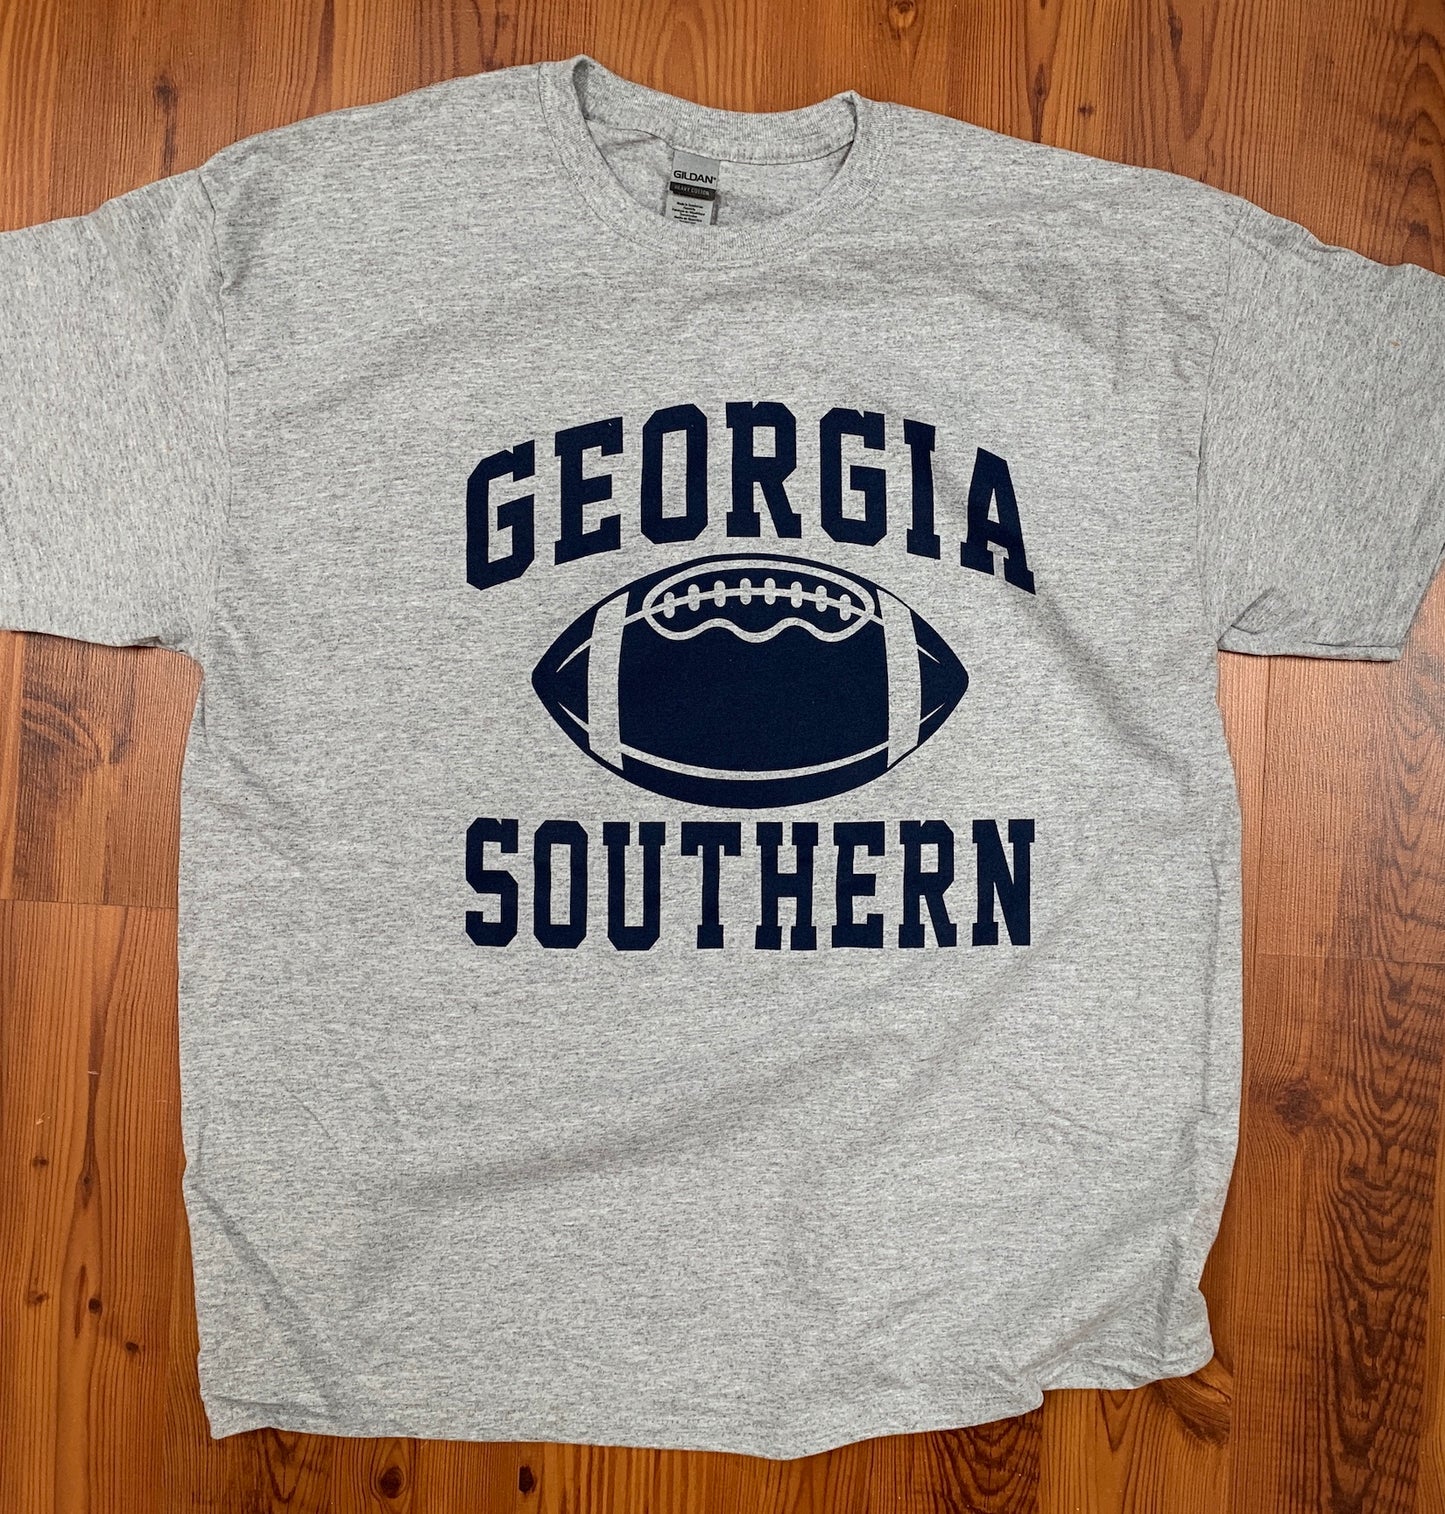 Classic Georgia Southern Football - Athletic Grey Tee